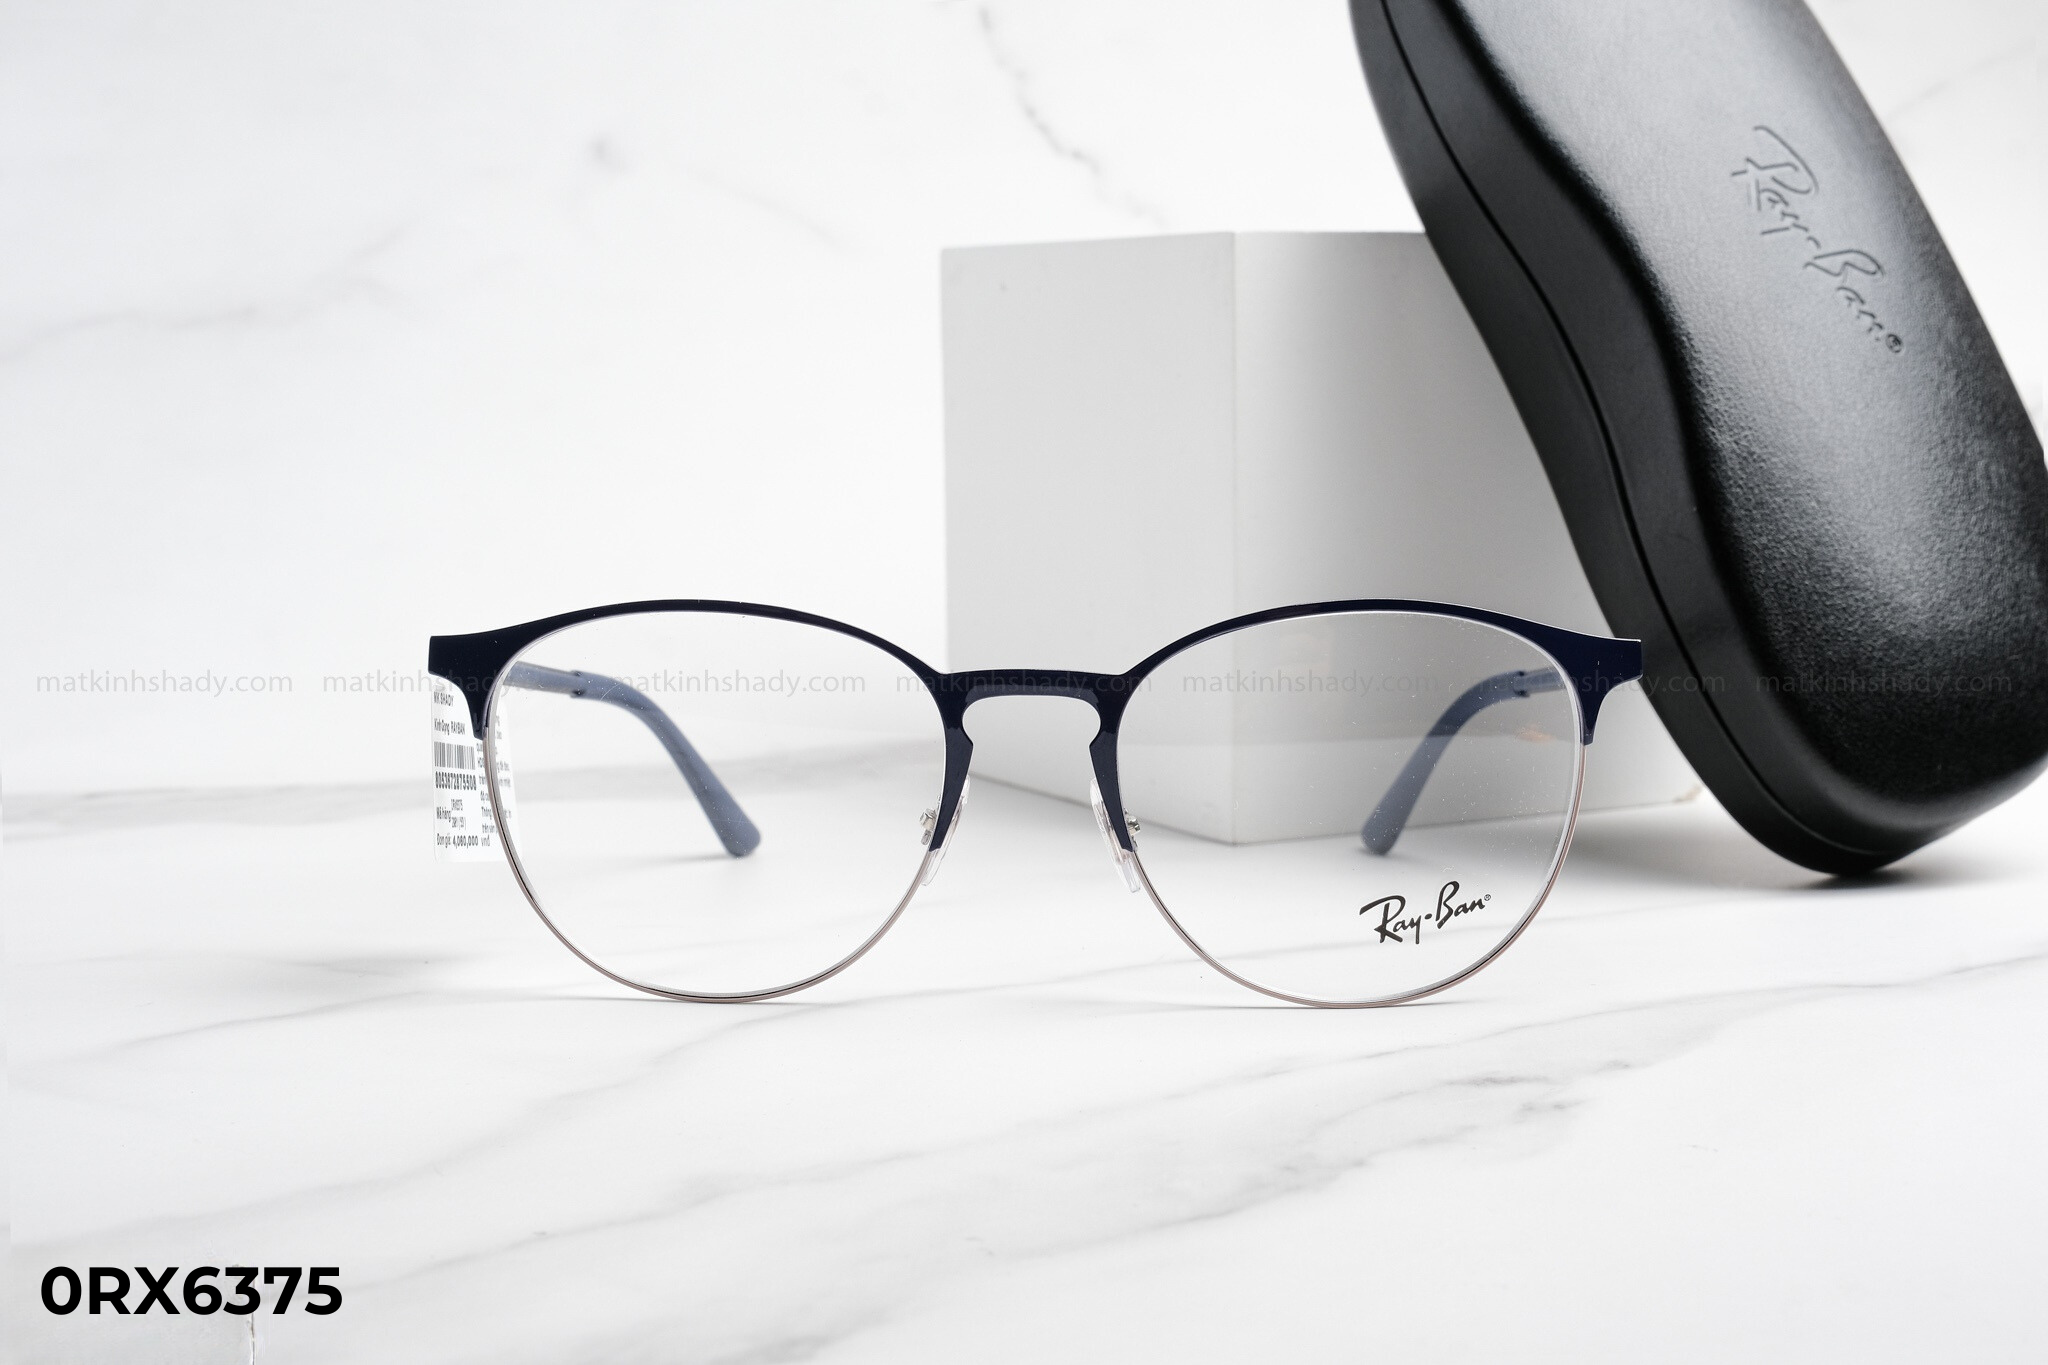  Rayban Eyewear - Glasses - 0RX6375 